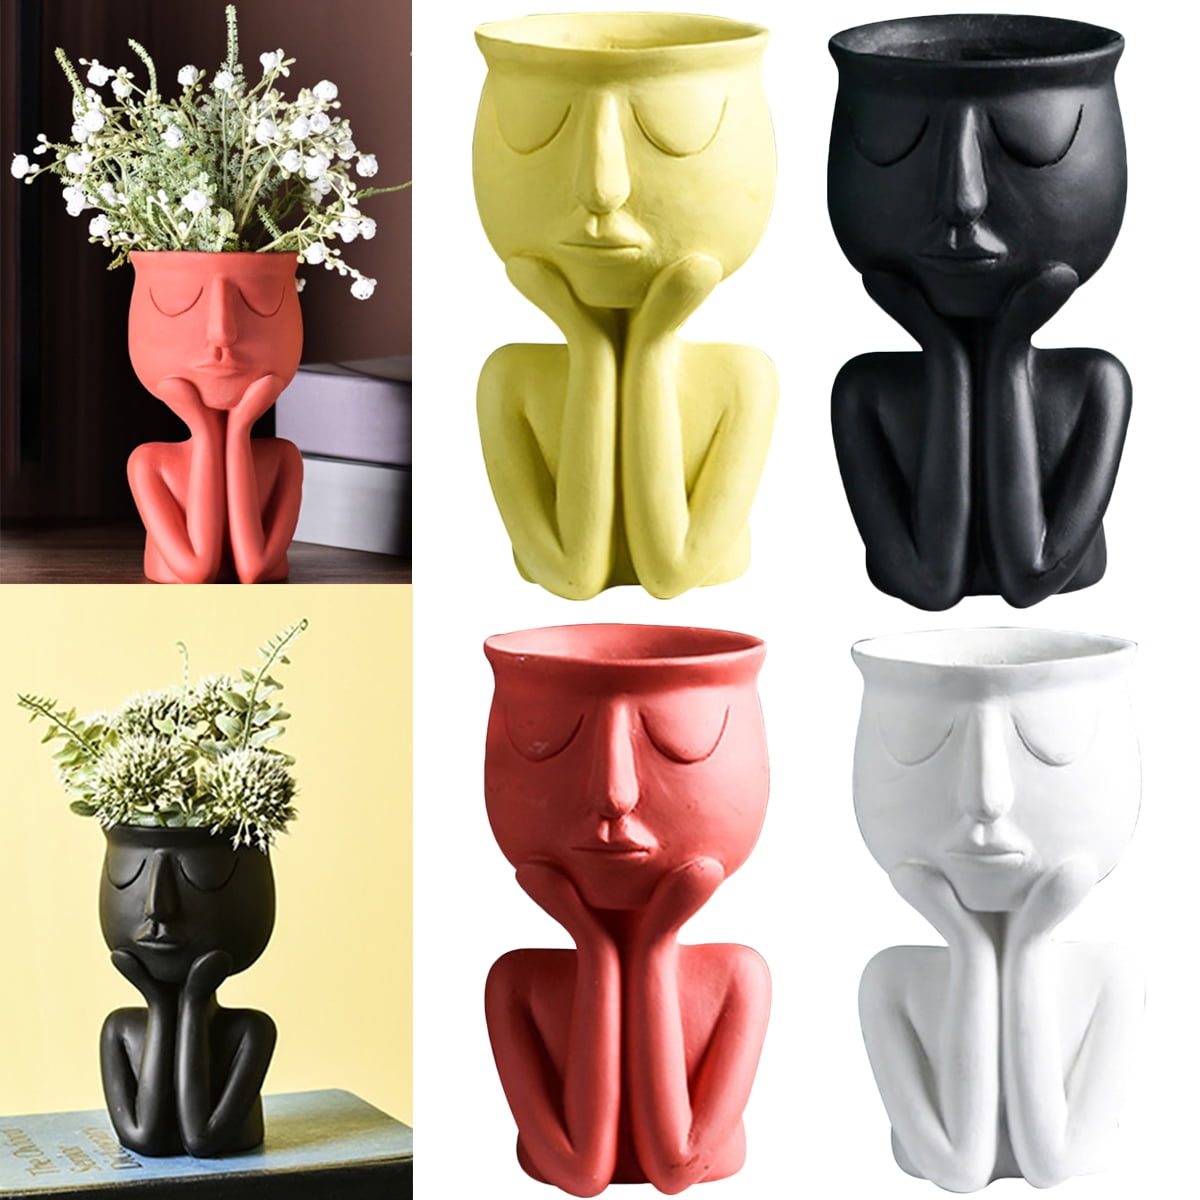 Abstract Human Face Ceramic Home Plants Flower Pot Vase Planter Table Decors 